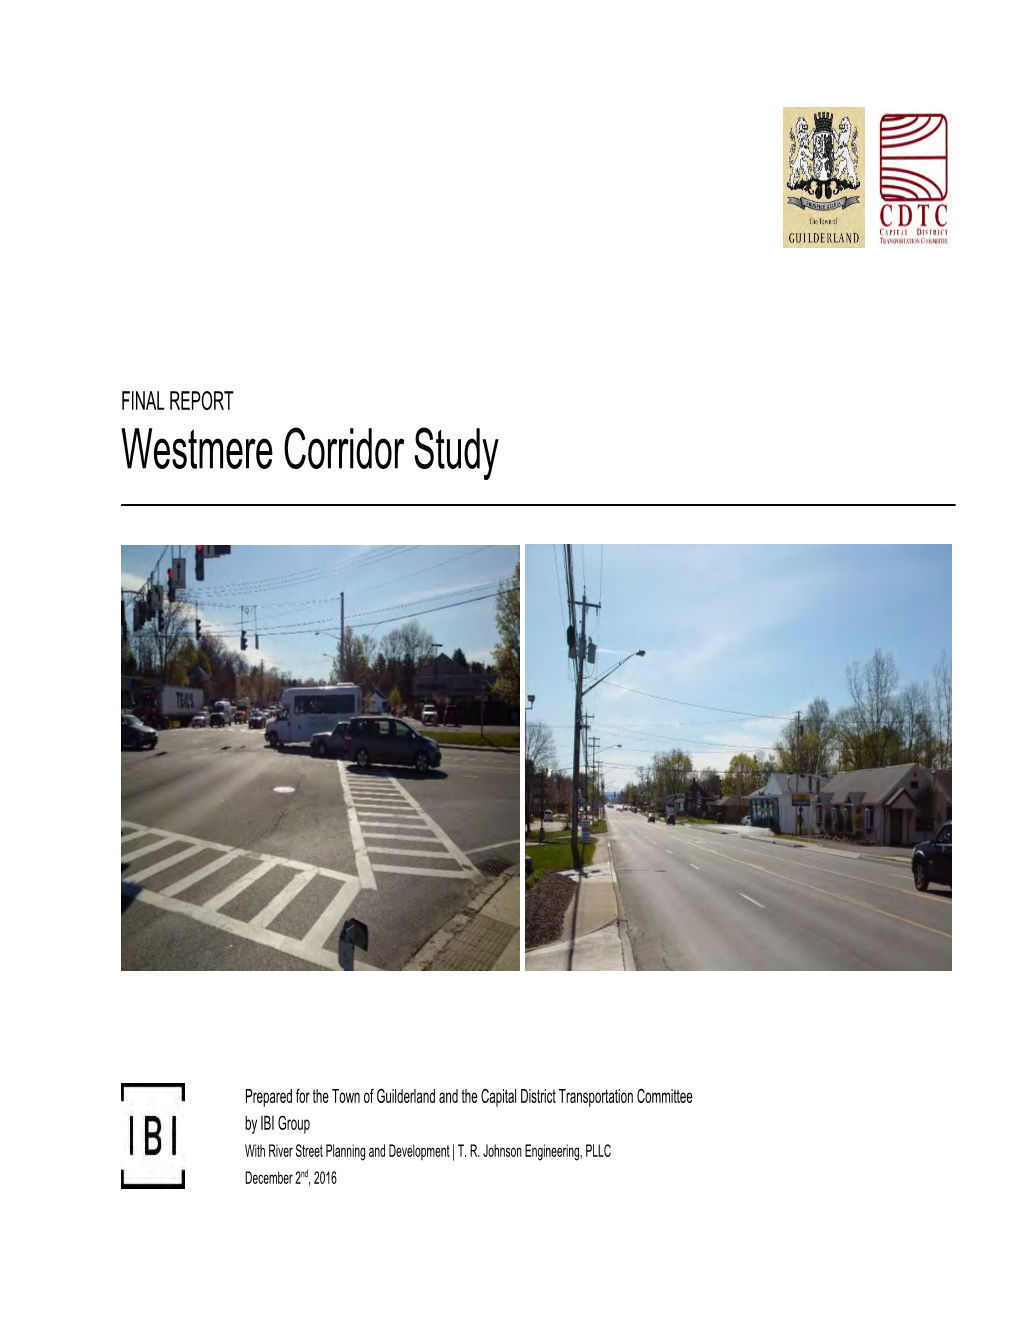 Westmere Corridor Study